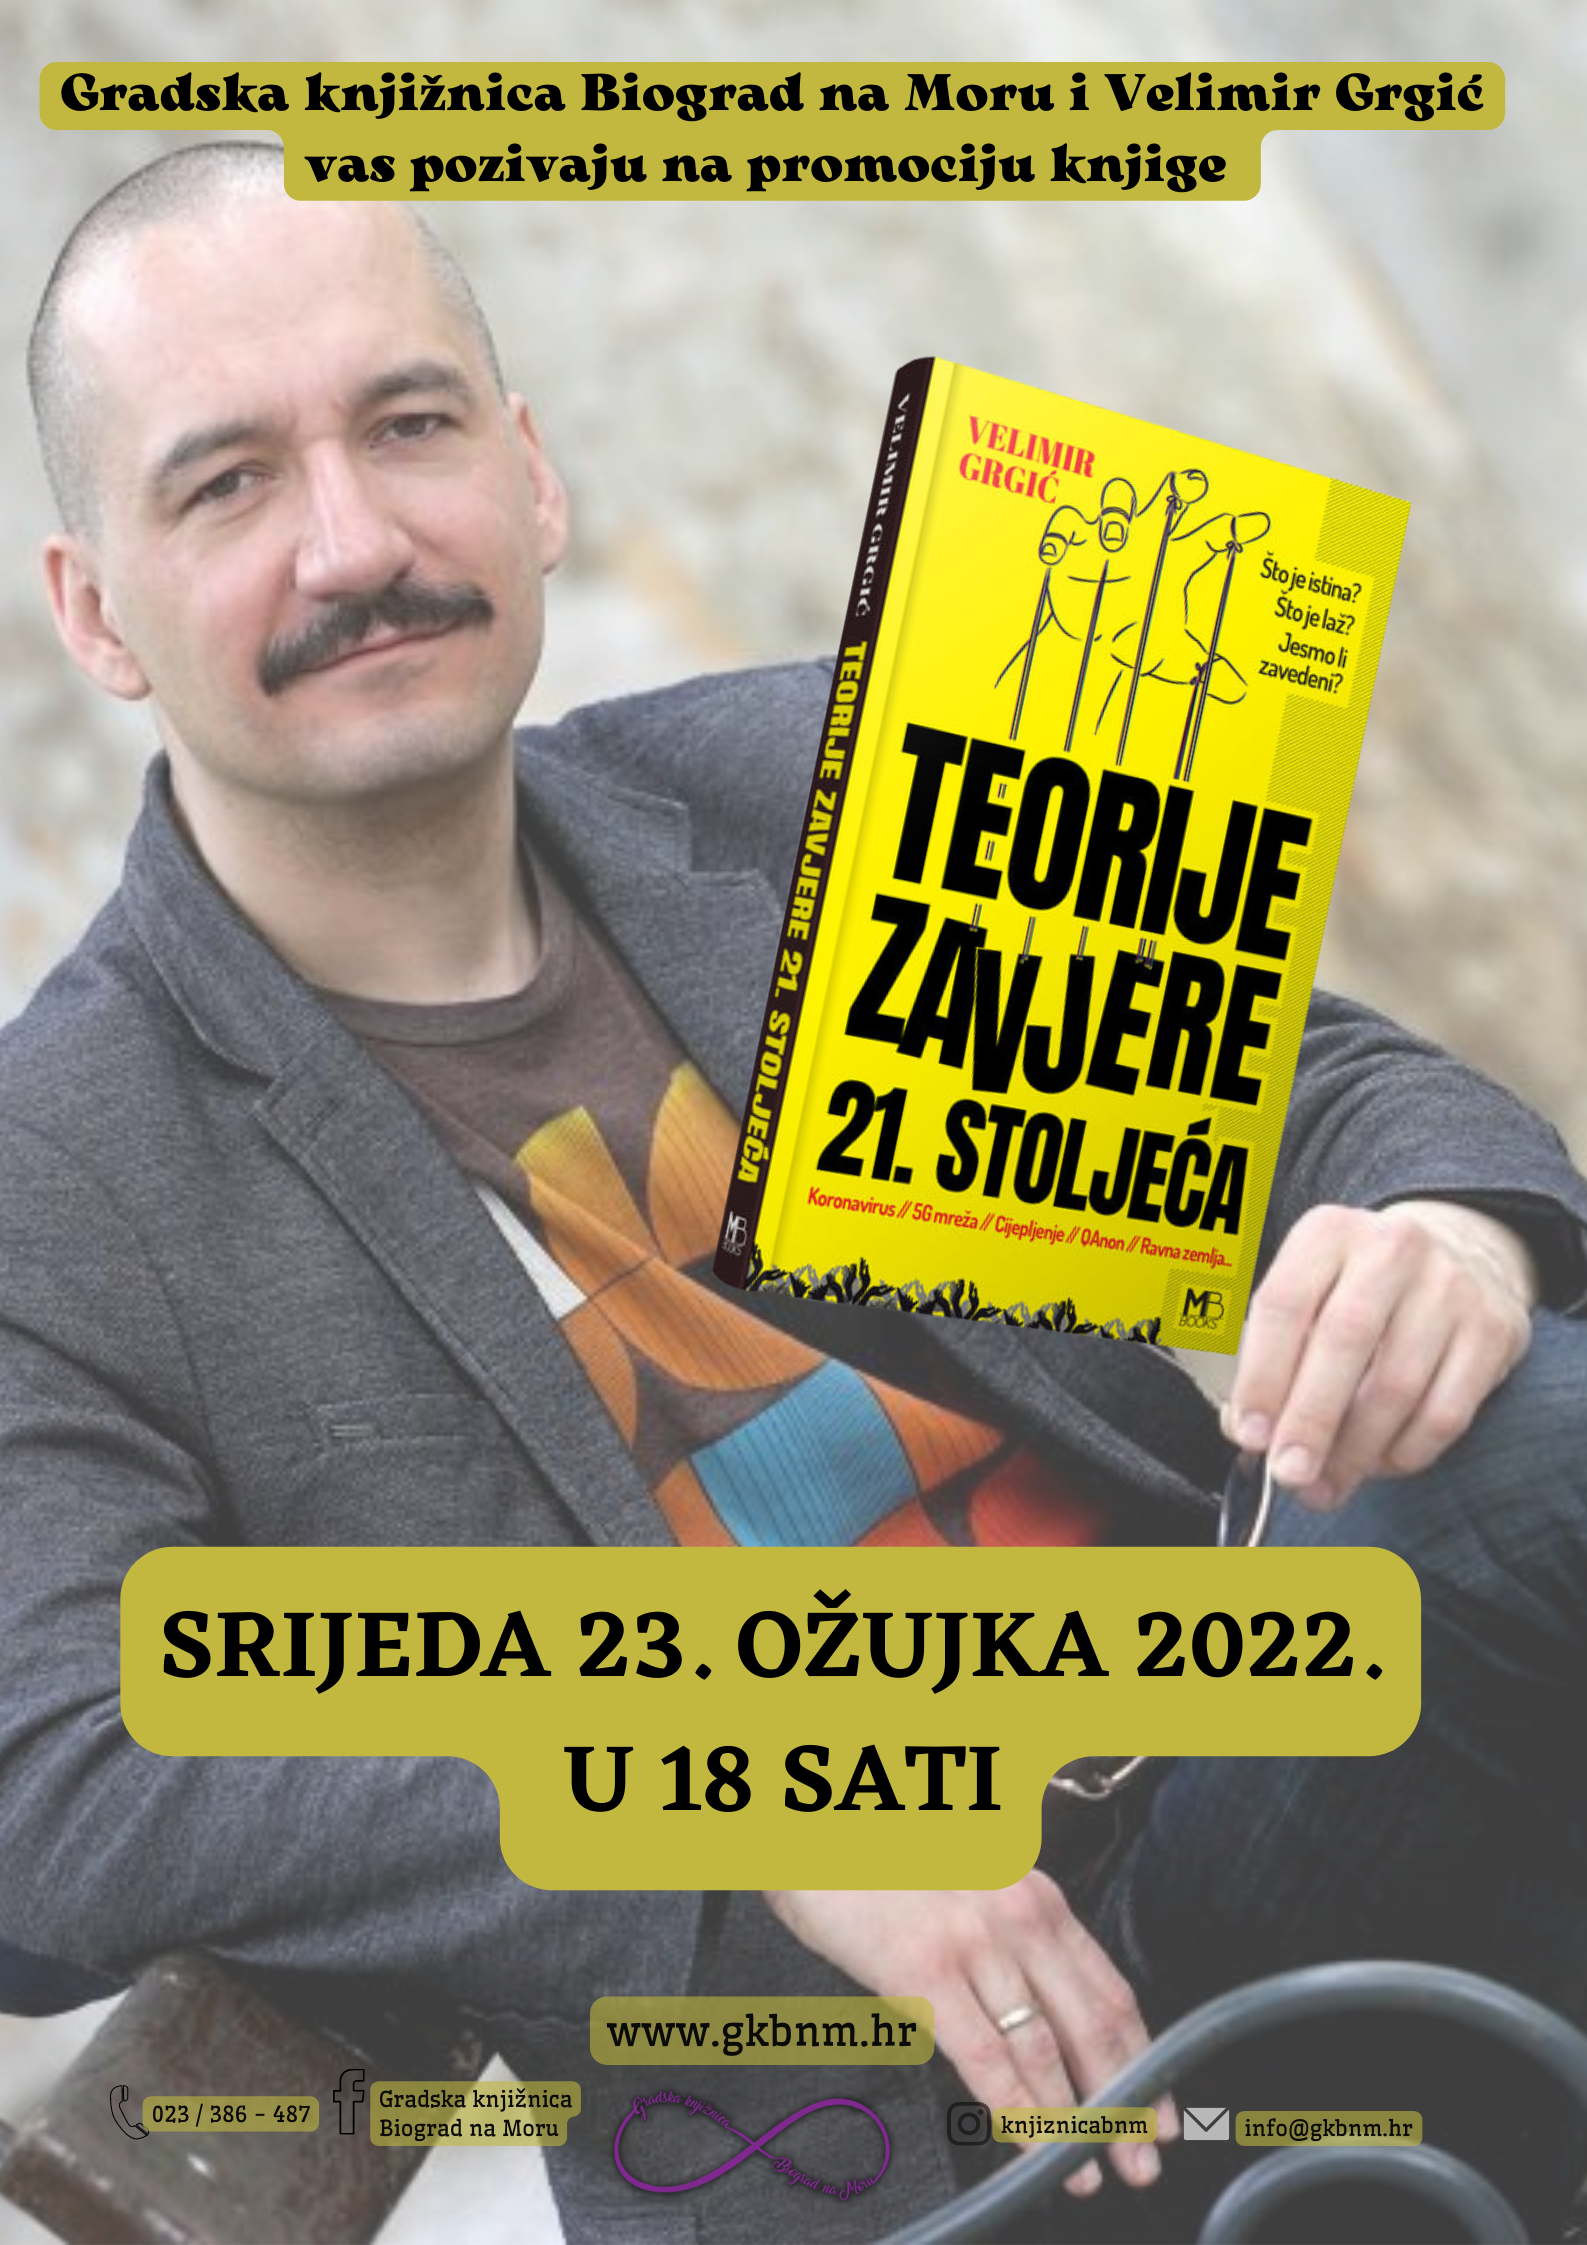 Grgi Velimir Zadar ita 2022